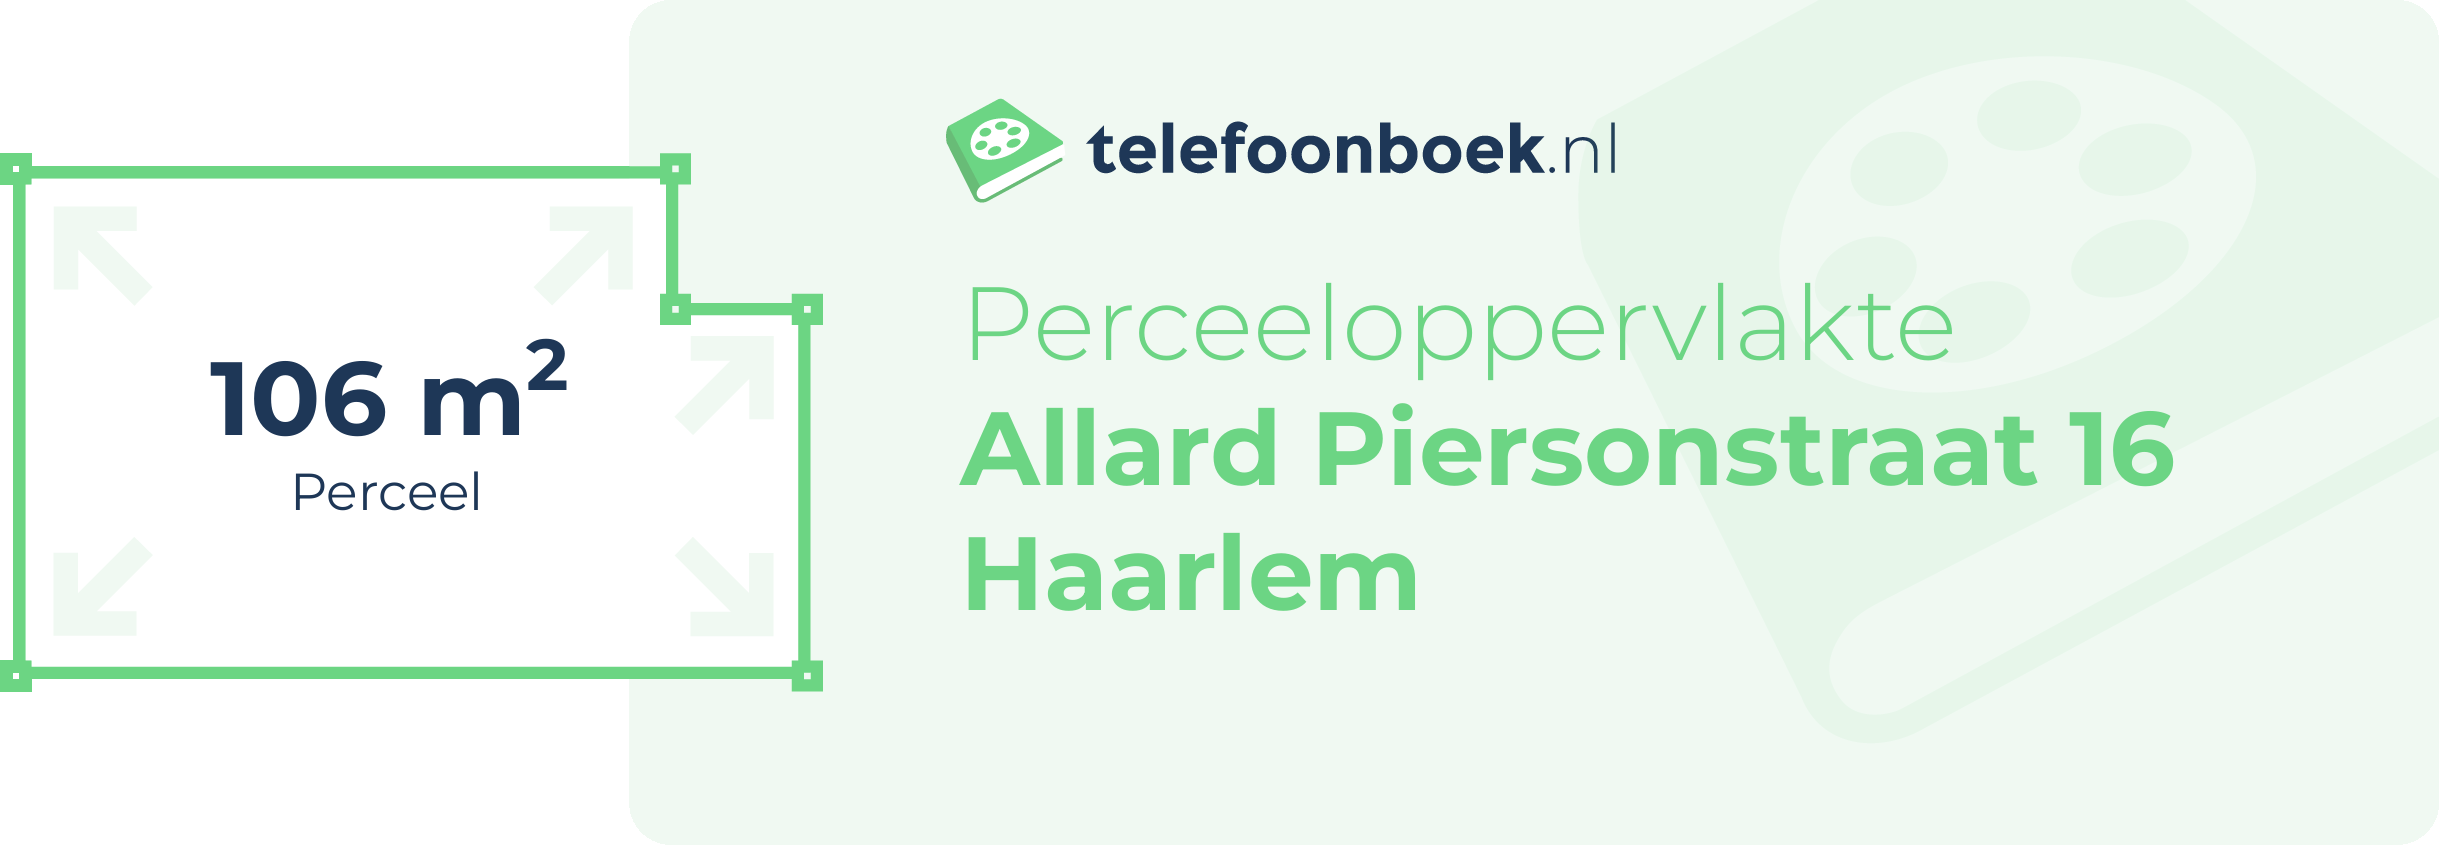 Perceeloppervlakte Allard Piersonstraat 16 Haarlem